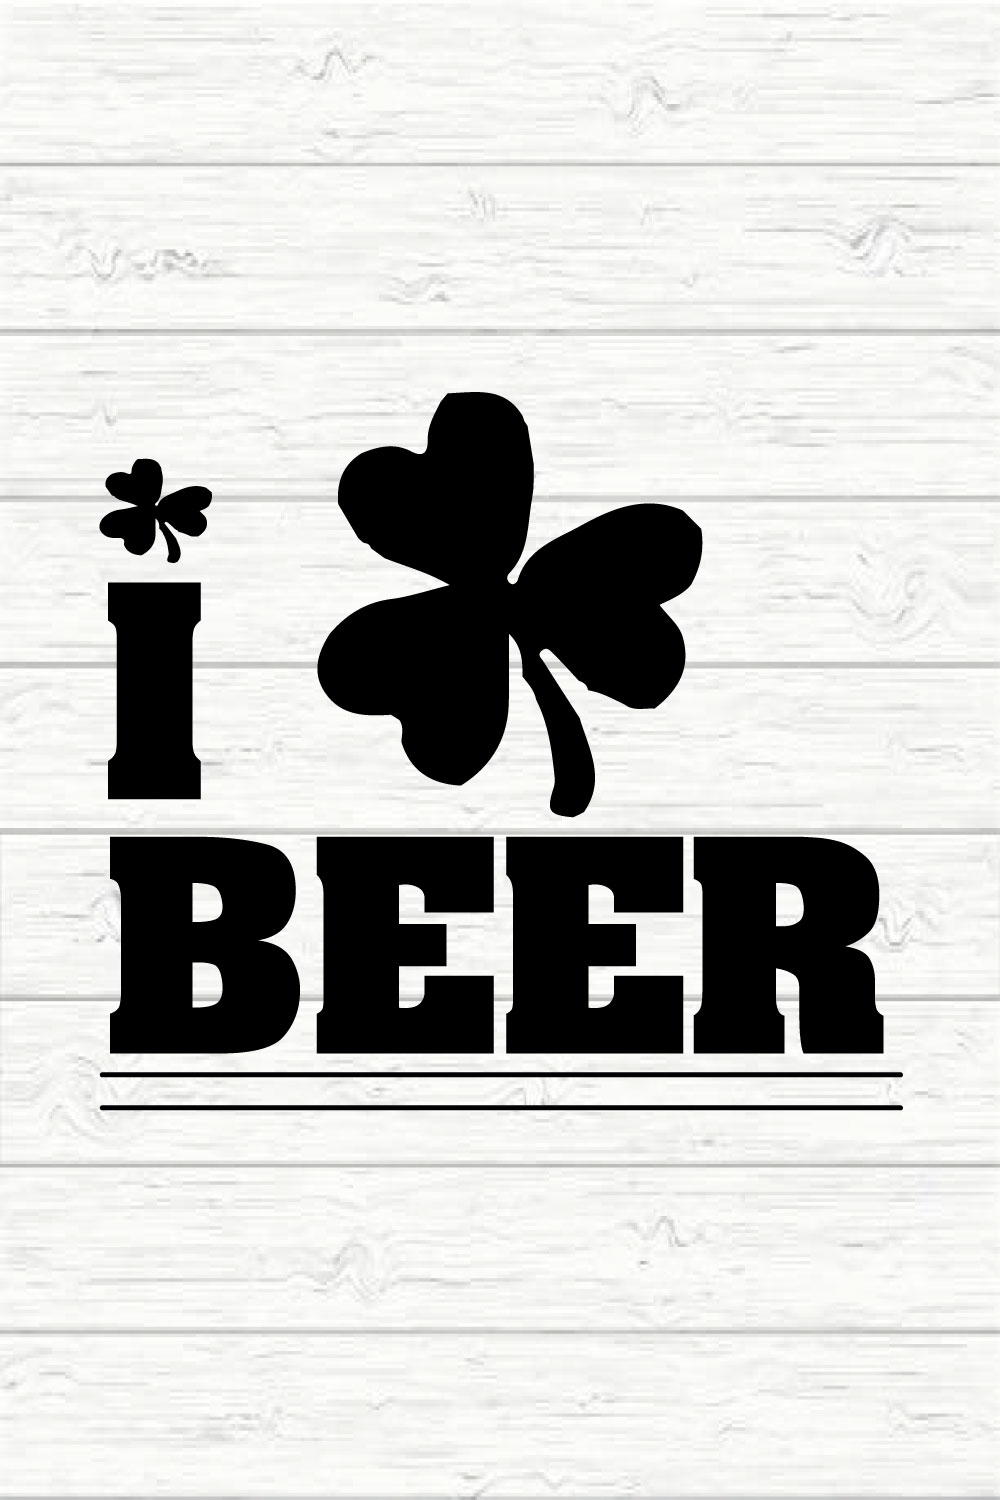 I Love Beer pinterest preview image.